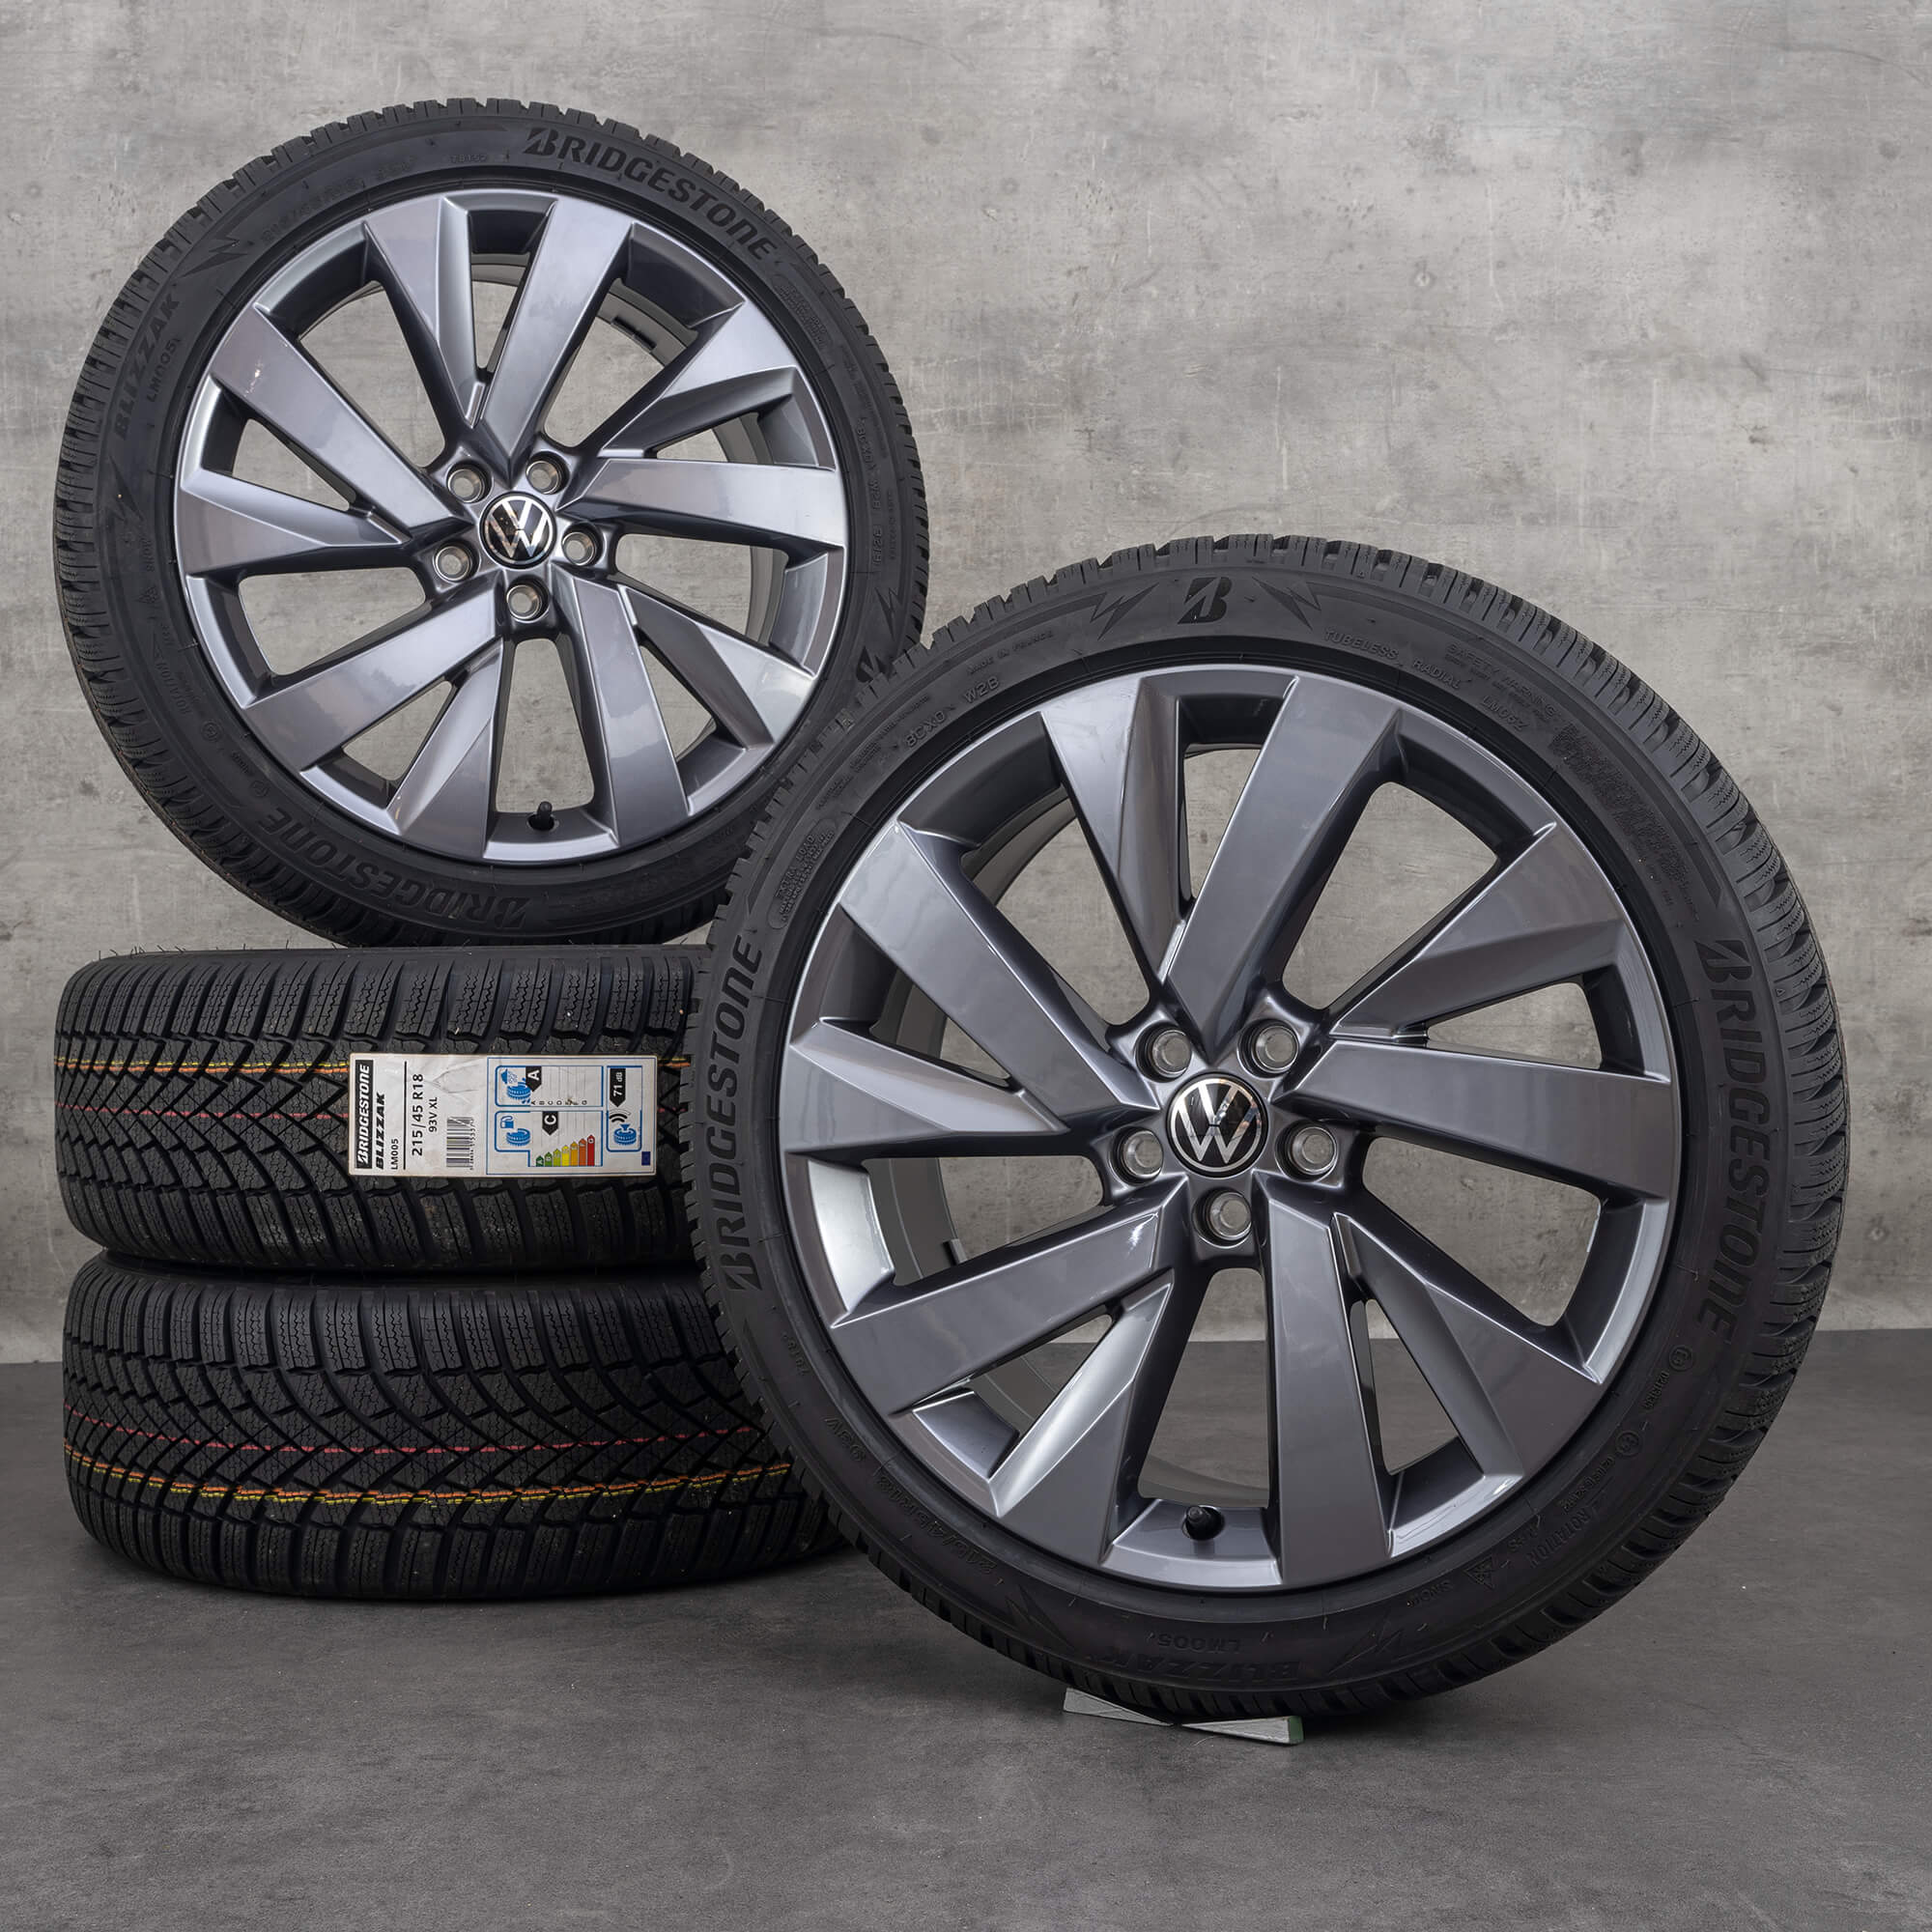 Cerchi VW 18 pollici T-Cross C1 2G Funchal pneumatici invernali ruote